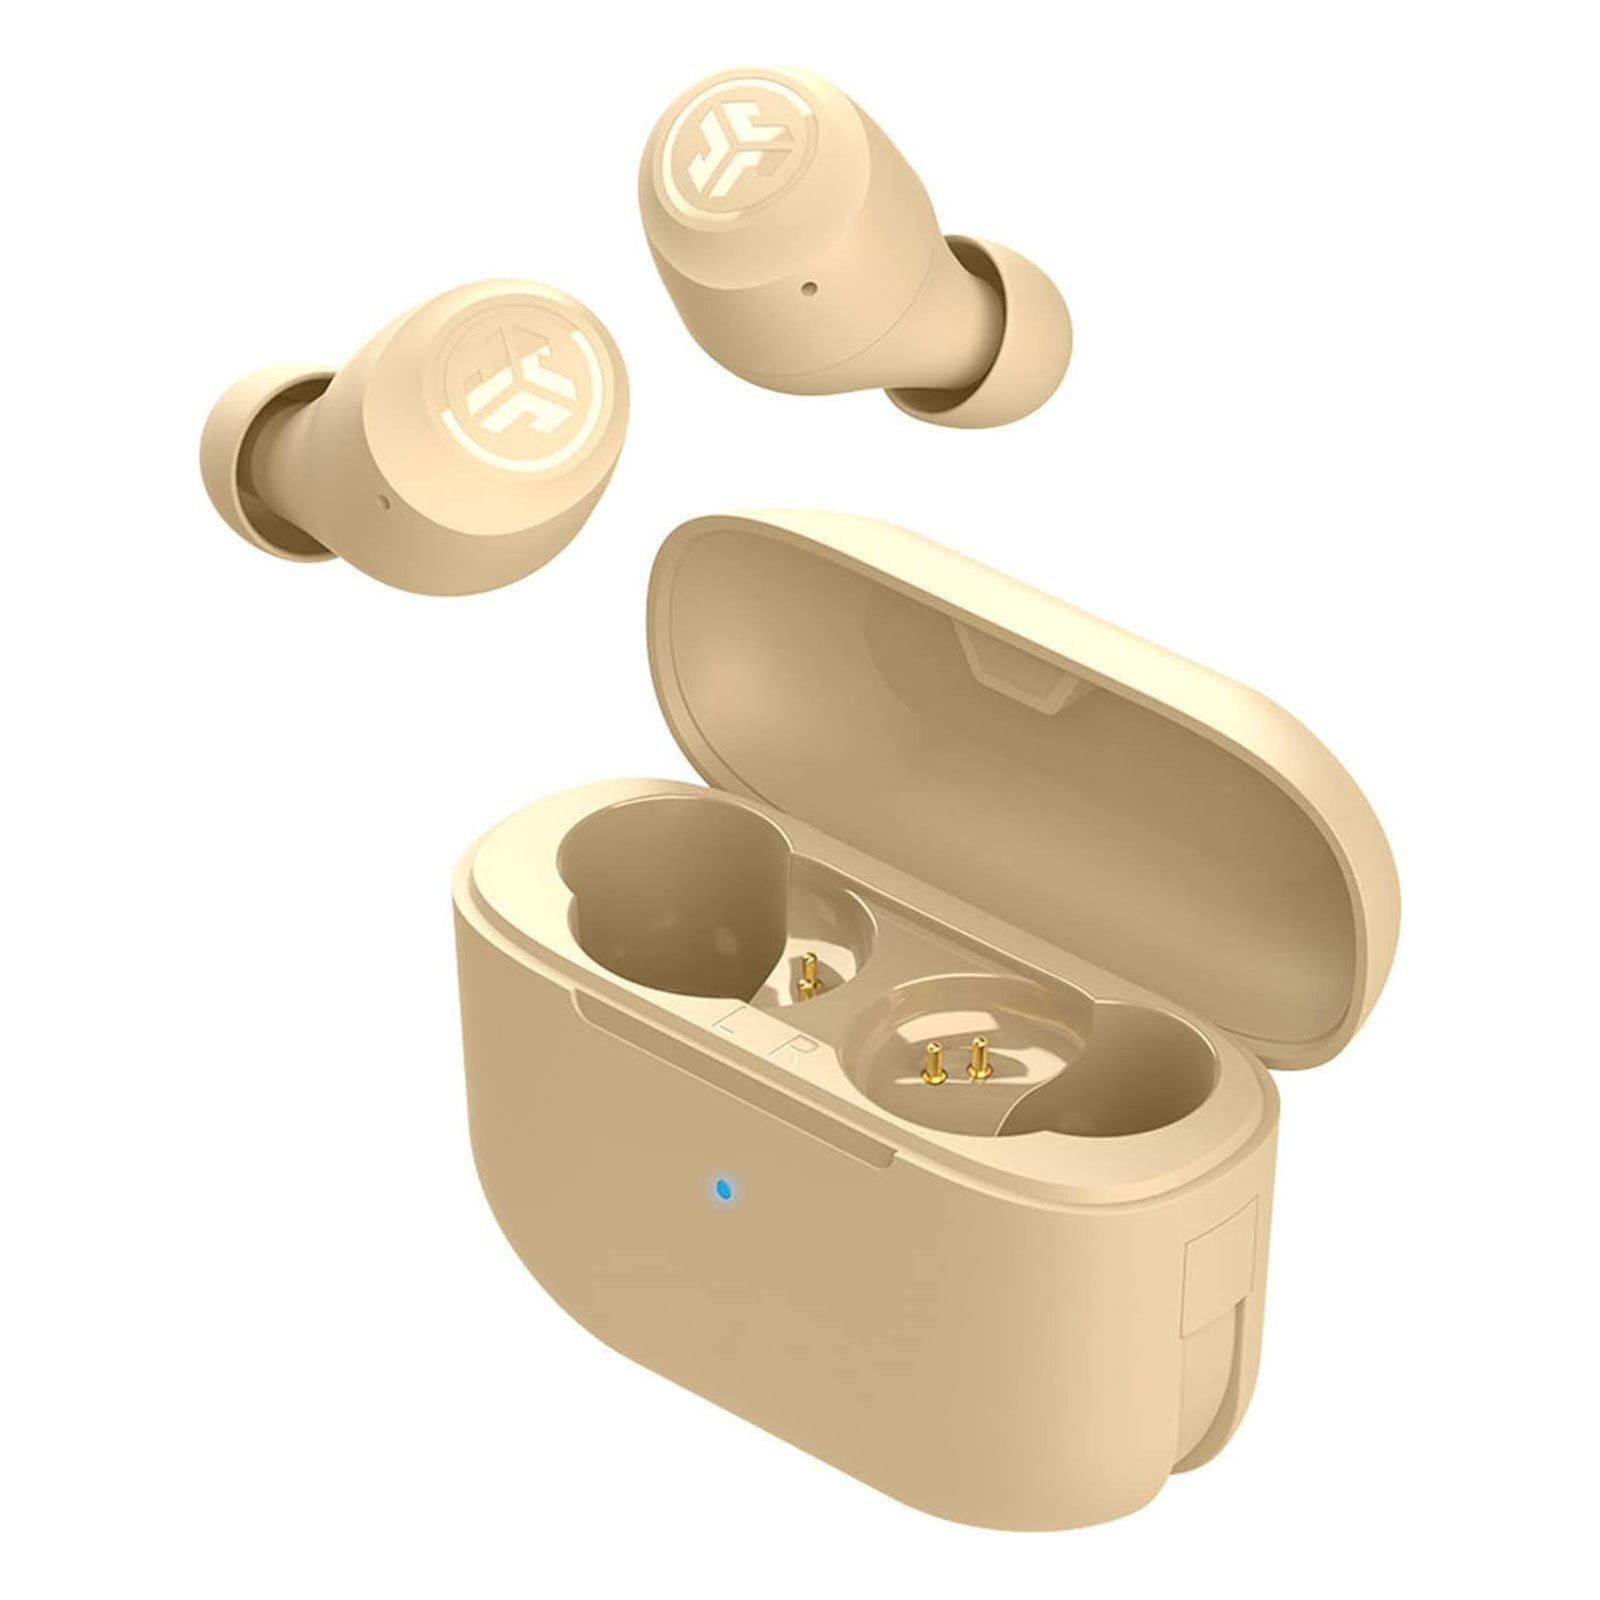 Jlab 155 (TWS, Hauttöne) Go Wireless Earbuds Air True Pantone Touch, USB-Ladecase, EQ3-Sound, Bluetooth, Tones In-Ear-Kopfhörer